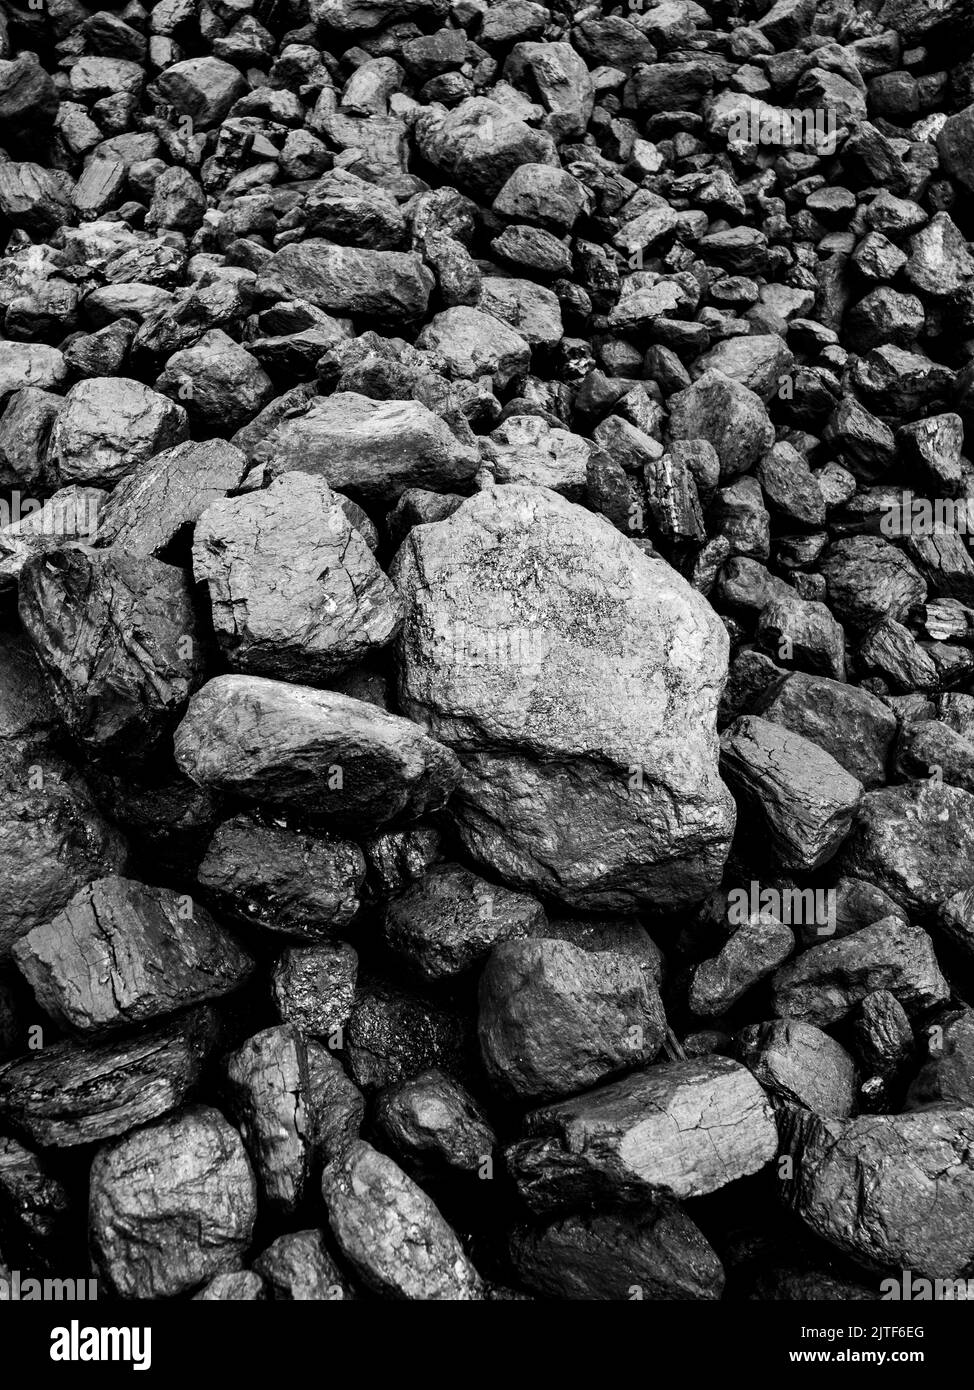 A pile of coal in a railway shunting yard. Stock Photo